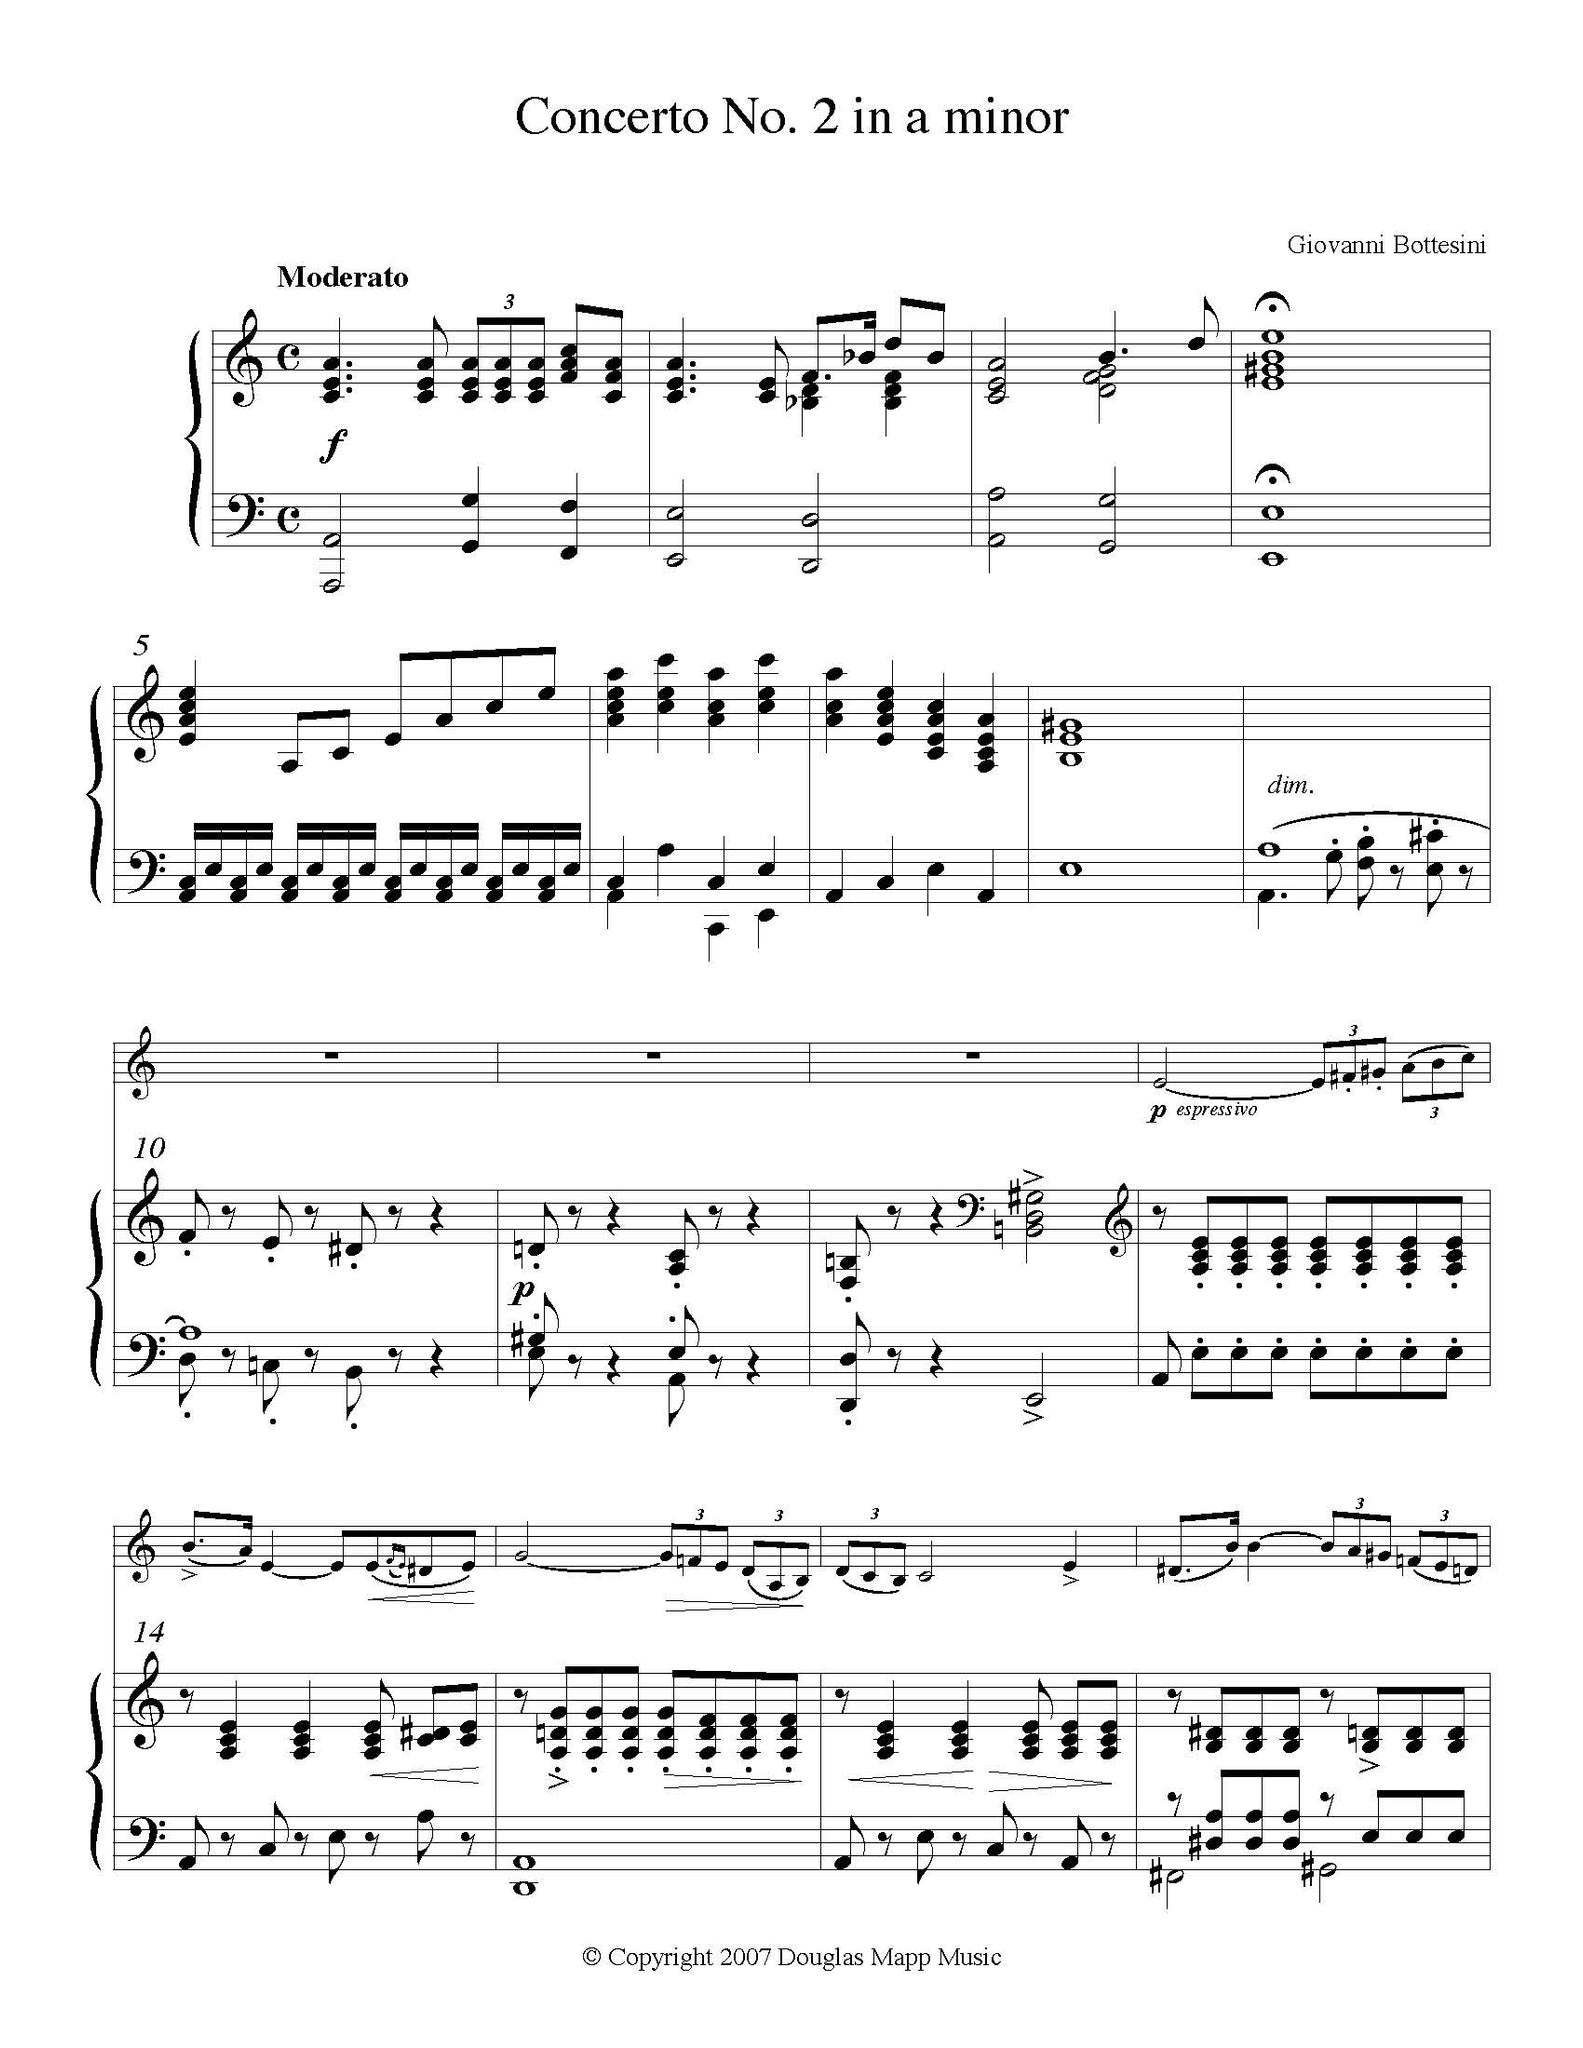 Bottesini Concerto No 2 orchestra tuning page 1